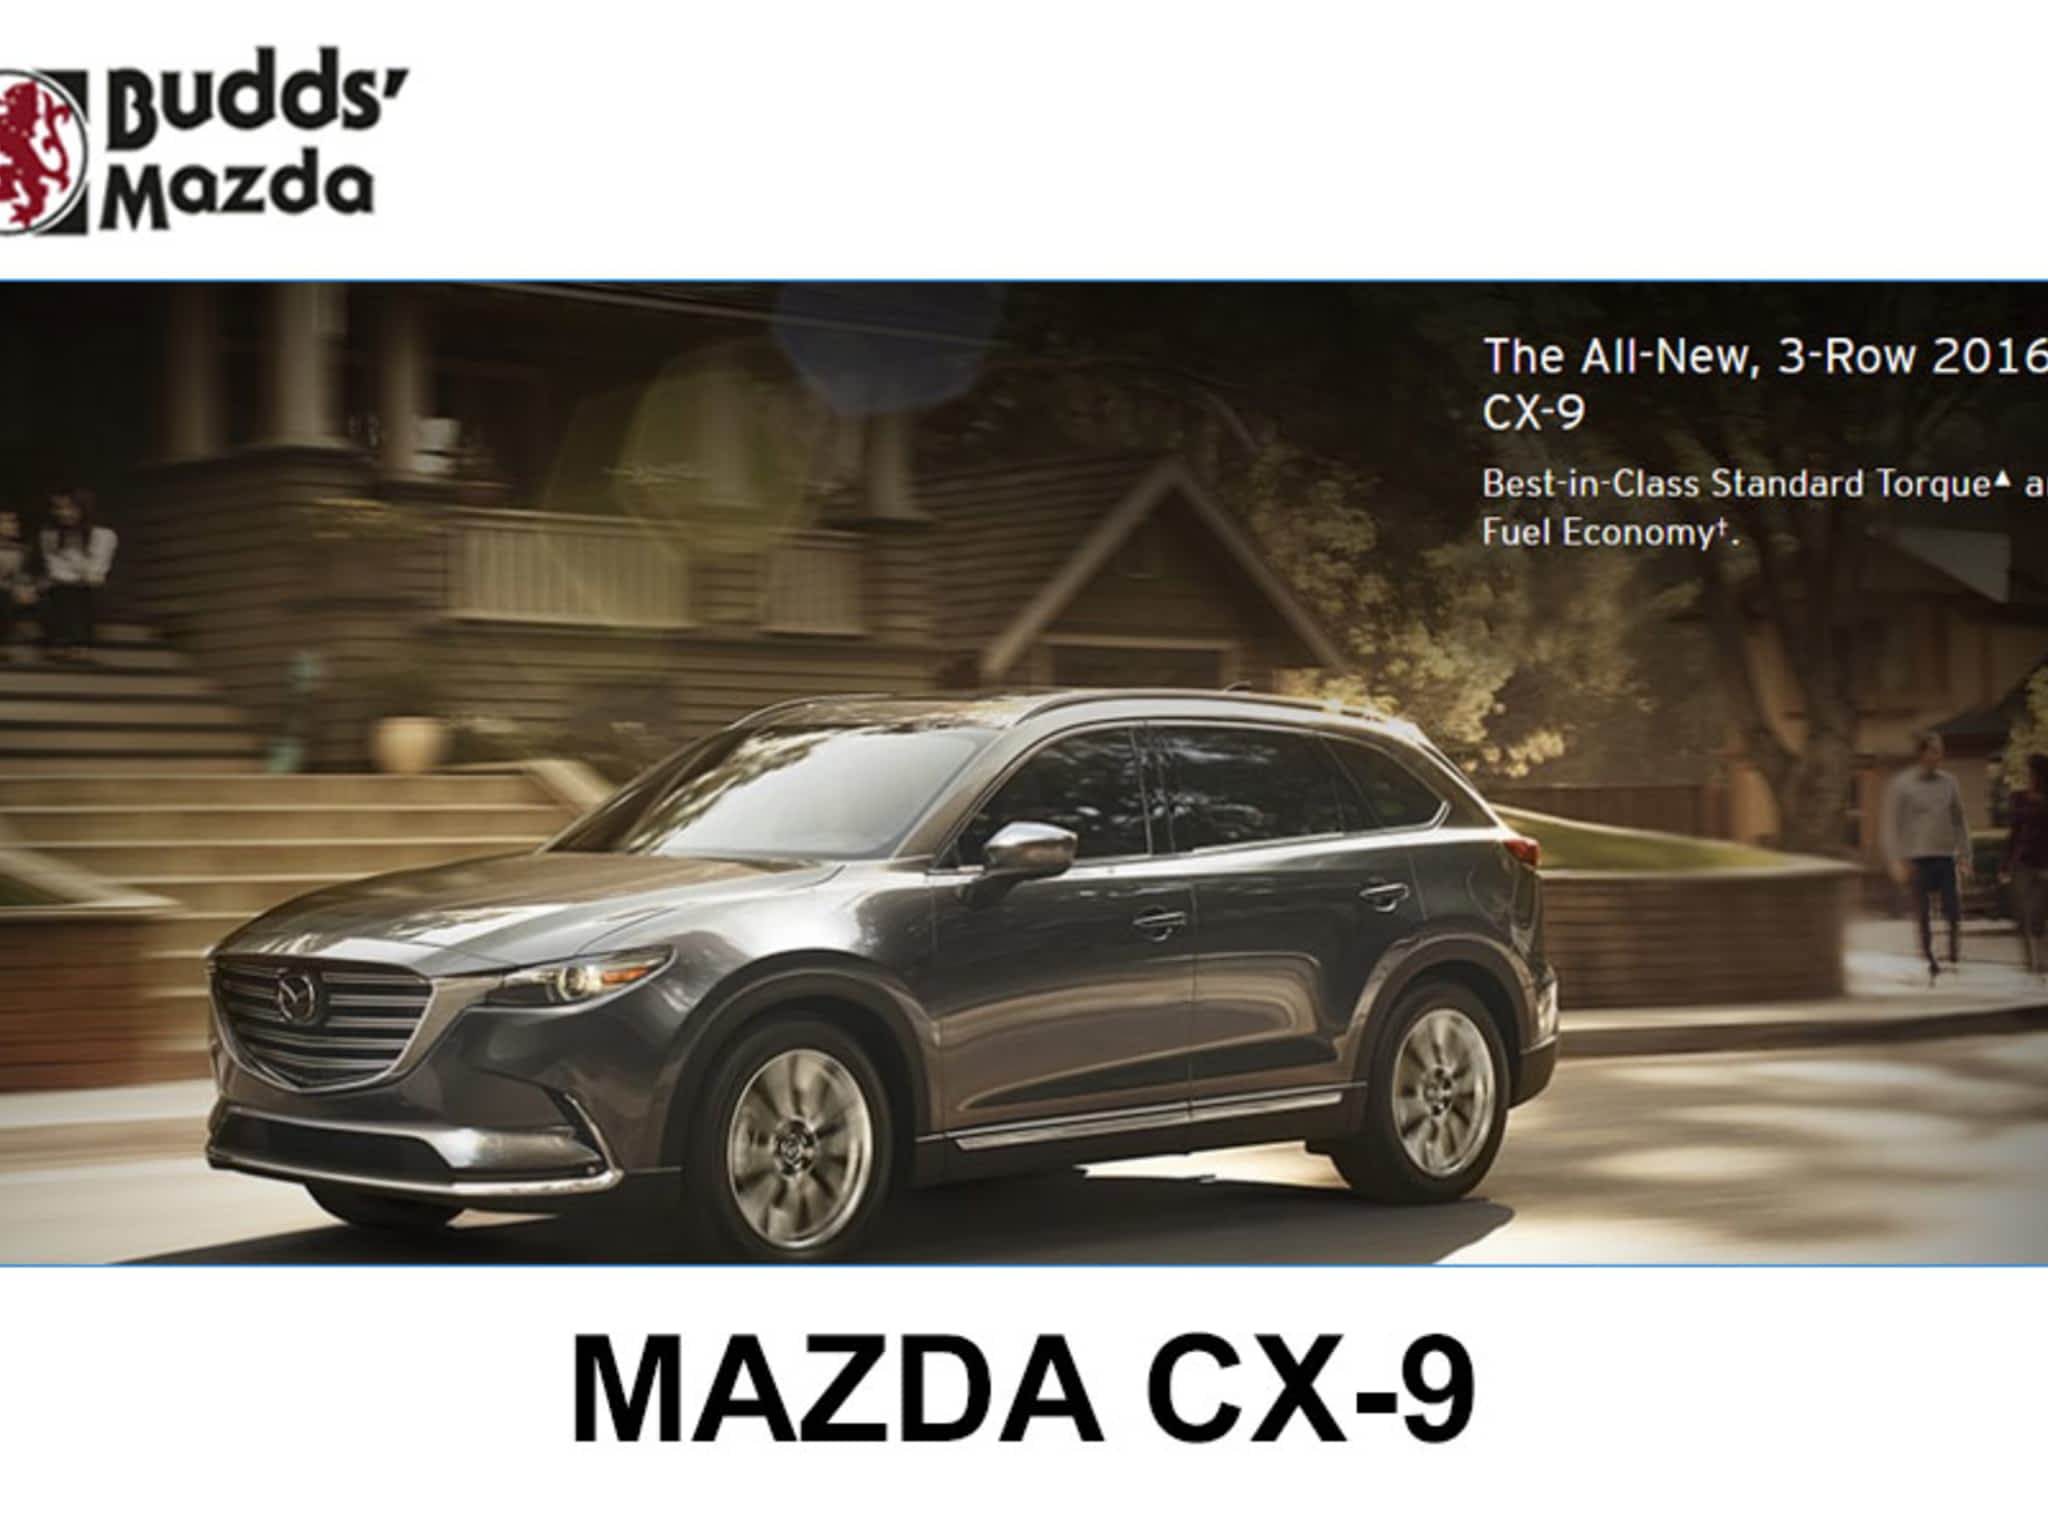 photo Budd's Mazda